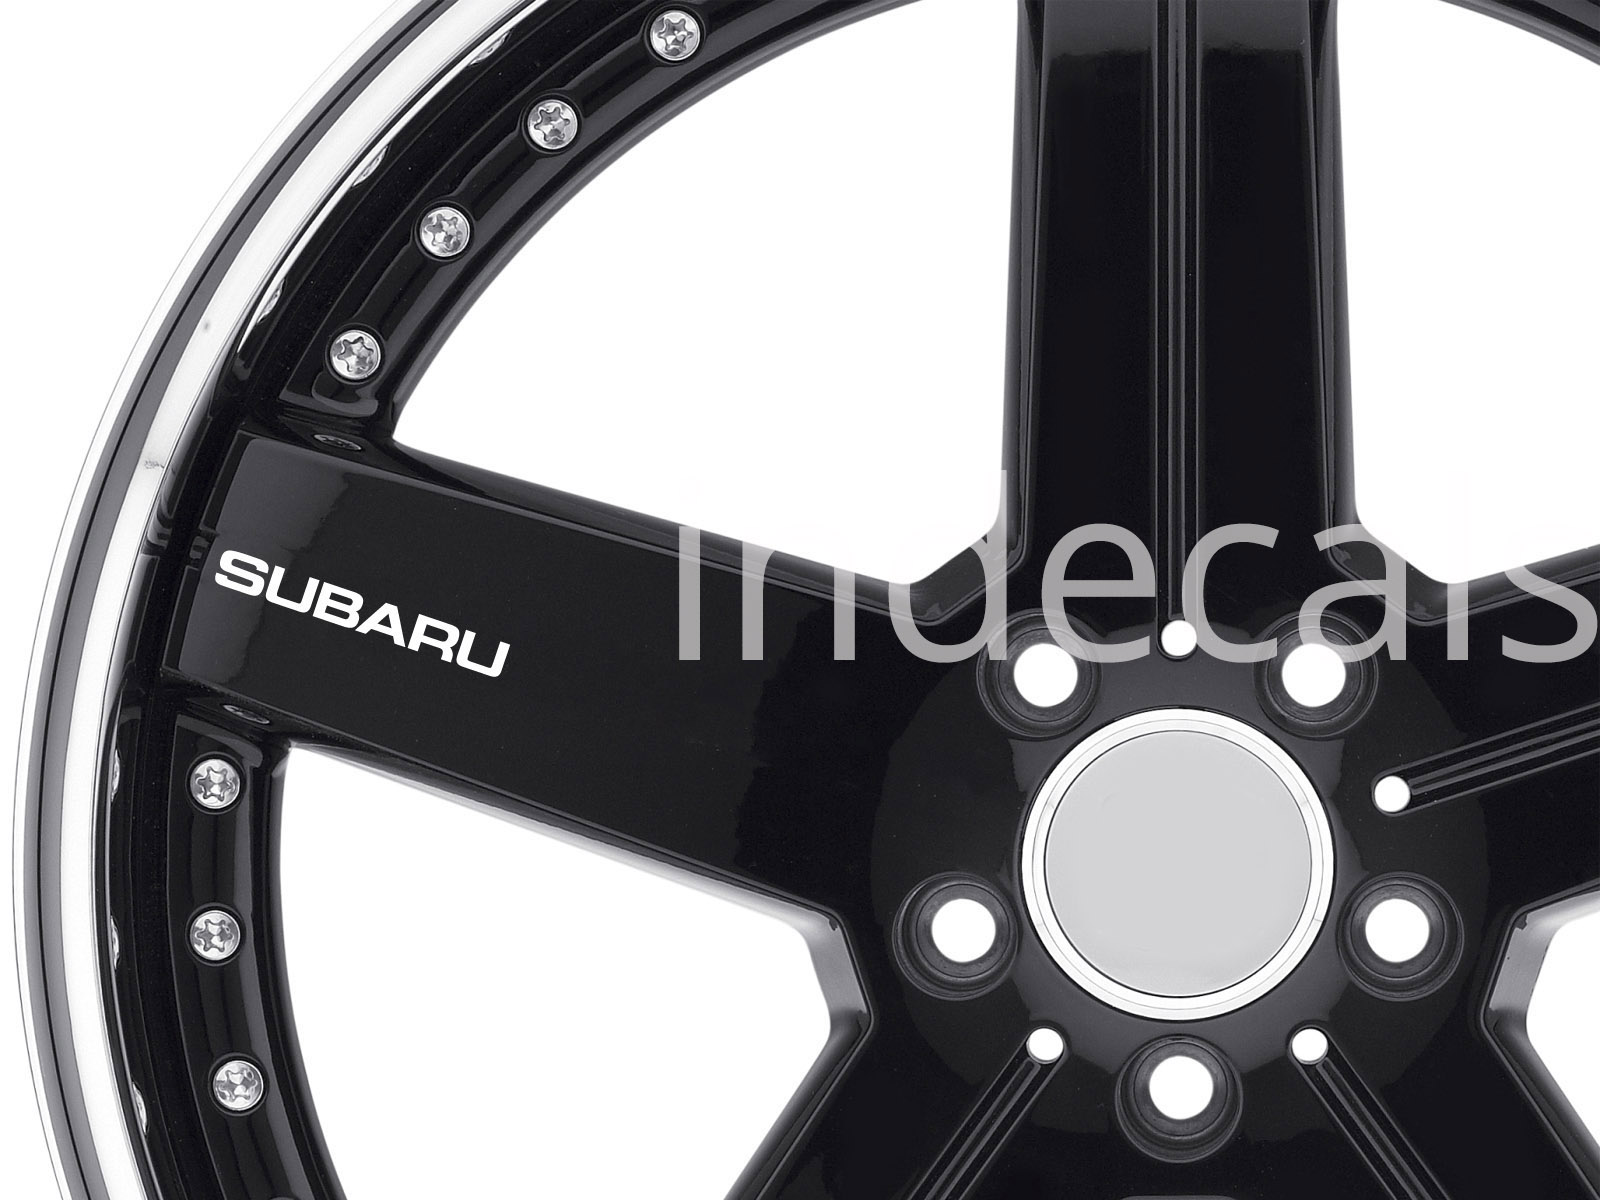 6 x Subaru Stickers for Wheels - White